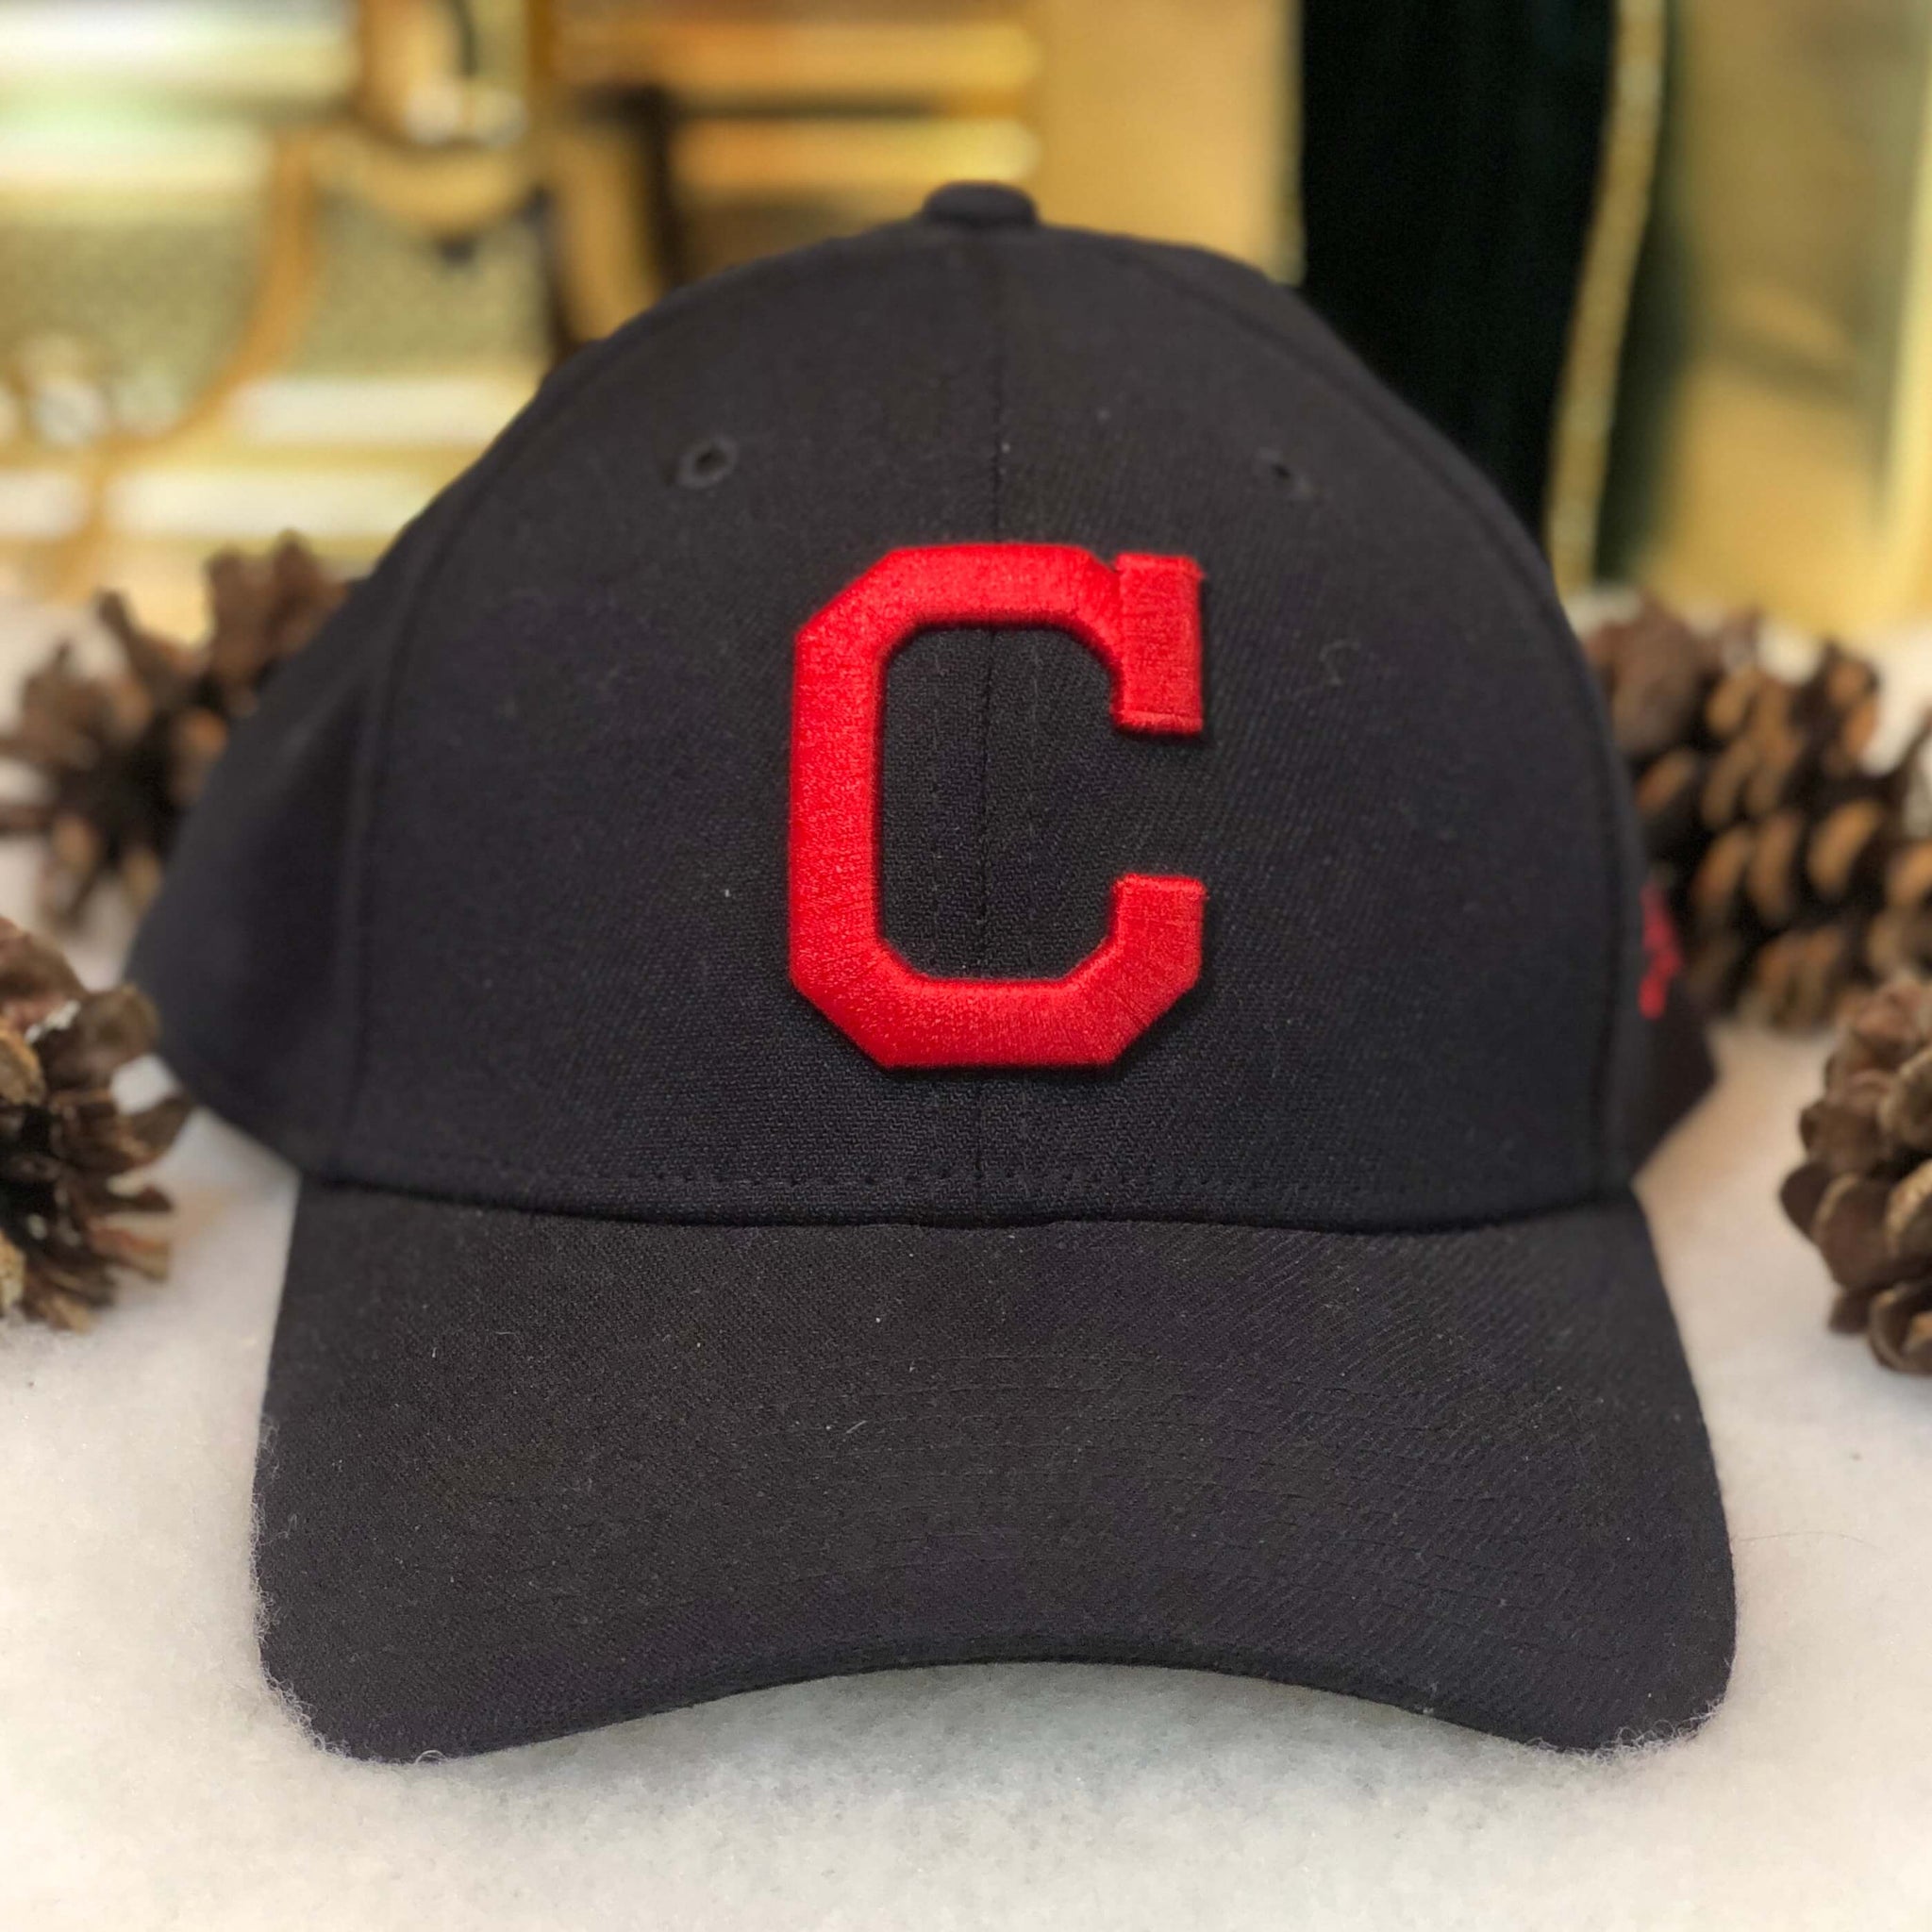 NWOT MLB Cleveland Indians New Era S/M Stretch Fit Hat